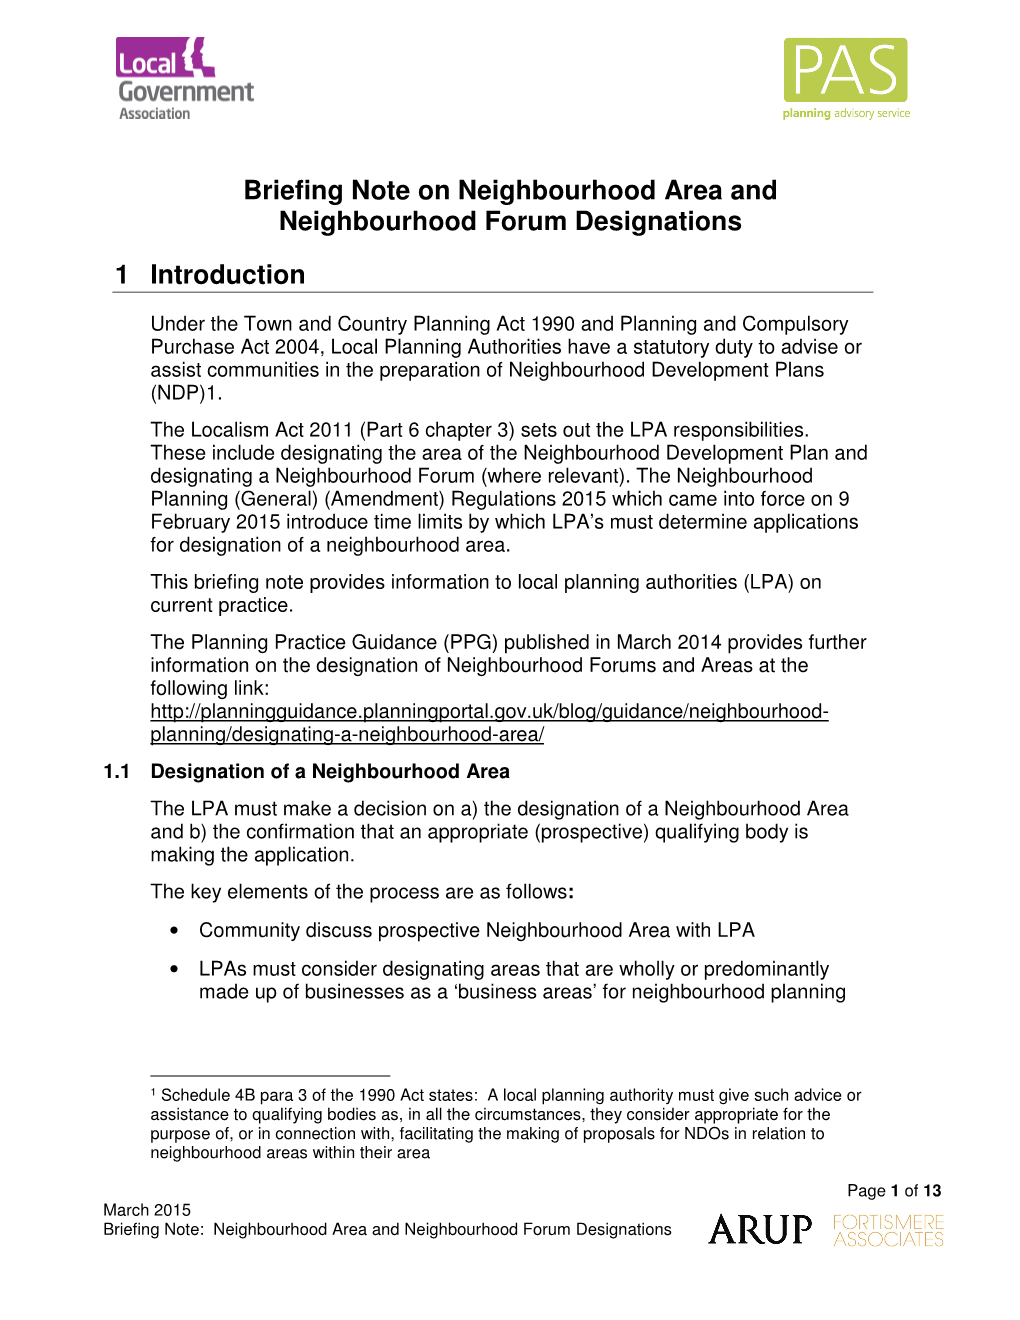 Briefing Note on Neighbourhood Area and Neighbourhood Forum Designations